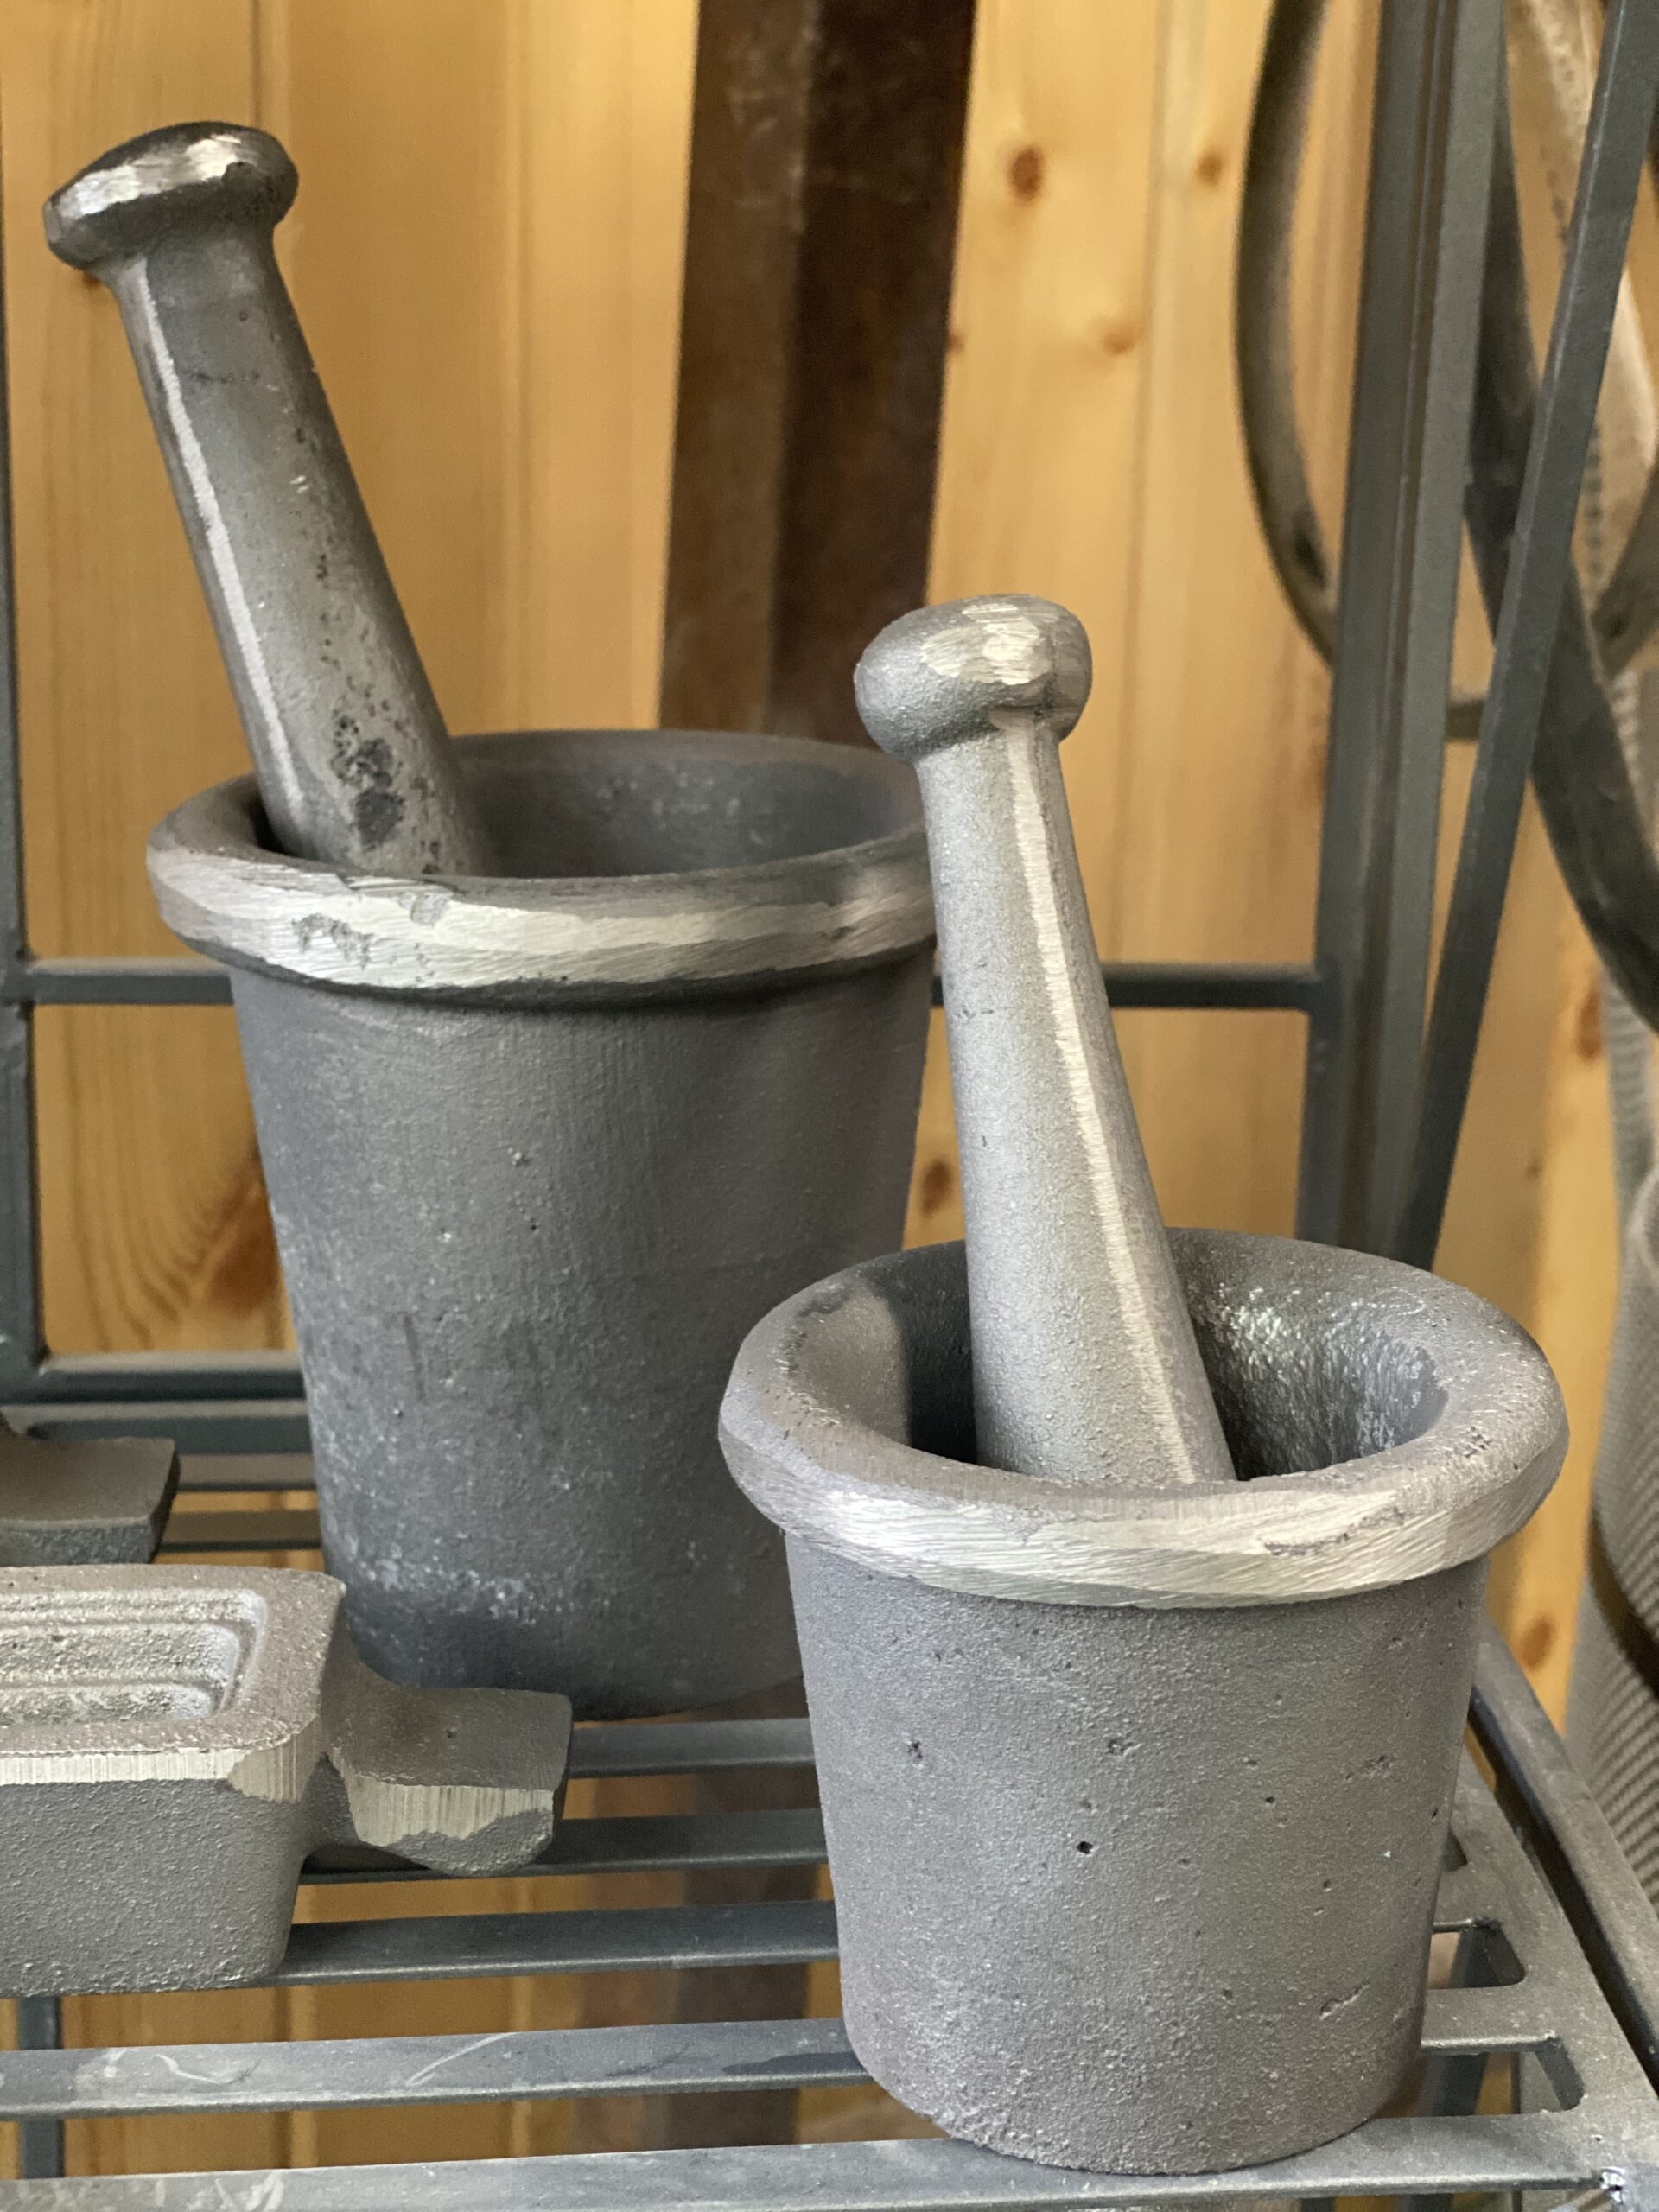 Mortar & pestle cast iron 4 mouth